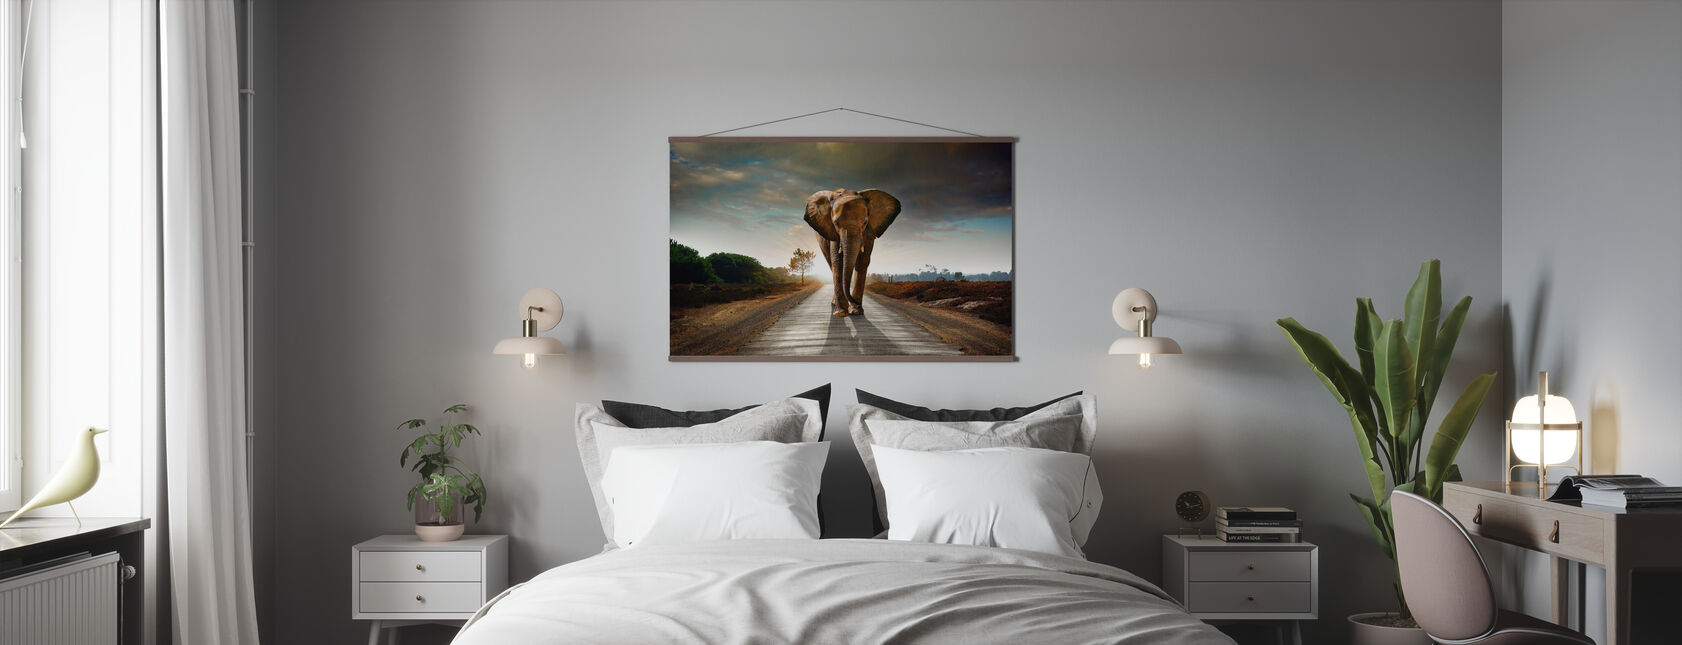 Elefantväg - Poster - Sovrum